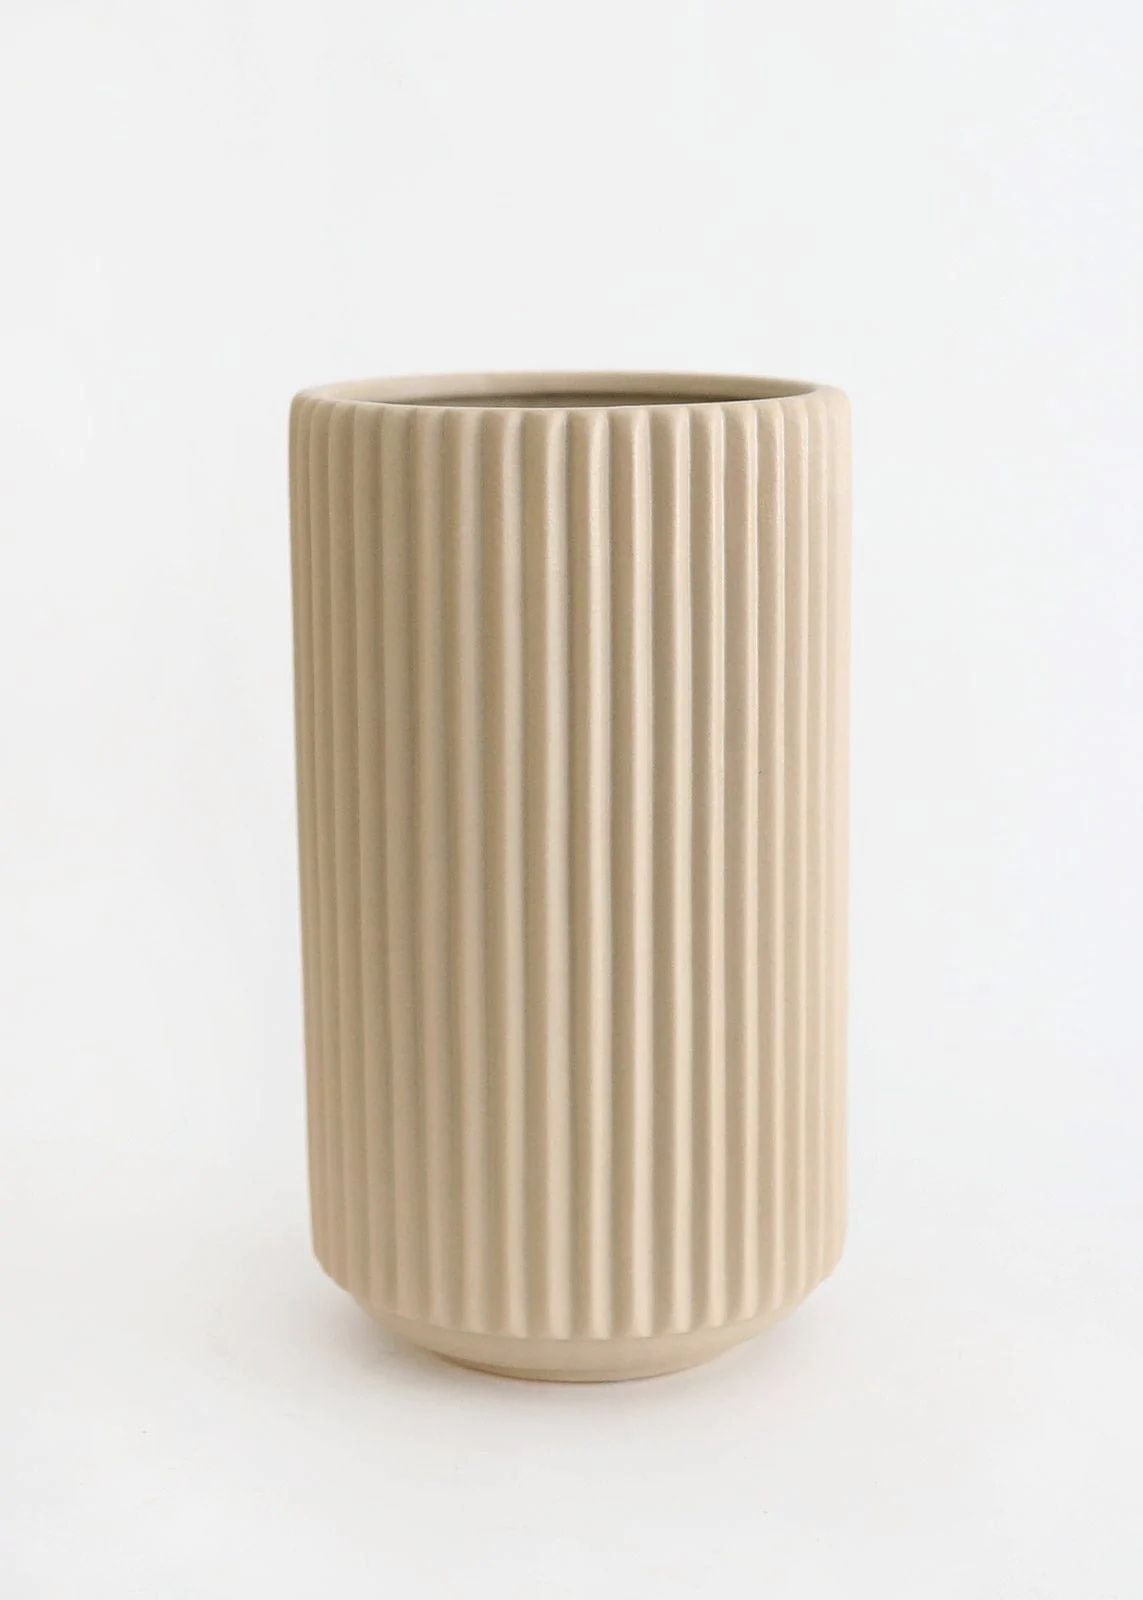 Ceramic Wide Ridged Vase in Beige | Exclusive Vases at Afloral.com | Afloral